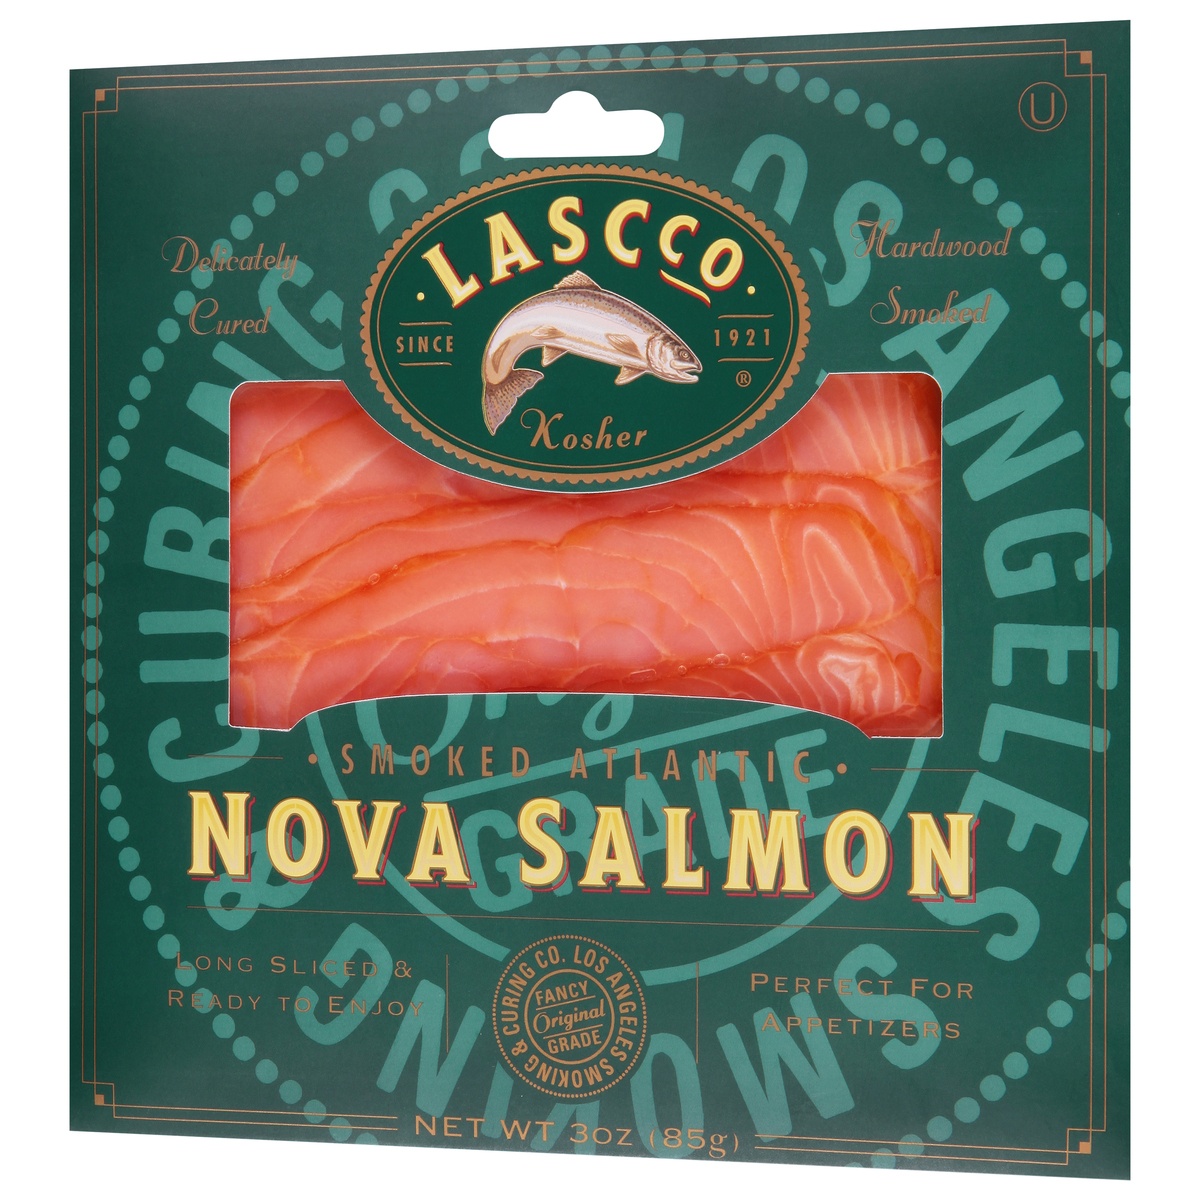 slide 3 of 9, Lascco Nova Salmon 3 oz, 